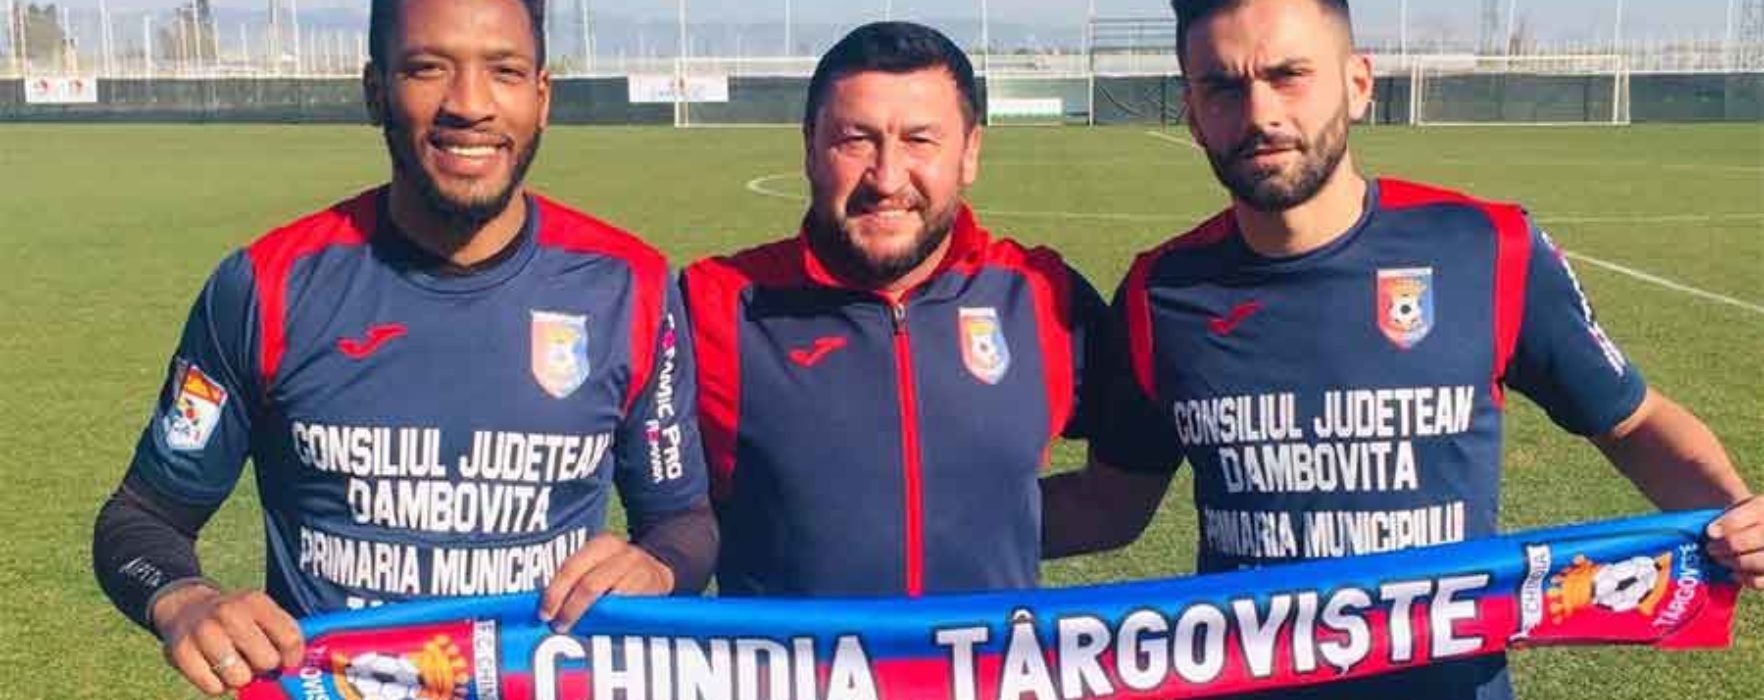 Fotbal: Chindia Târgovişte i-a transferat pe Bradley Diallo şi Valmir Berisha